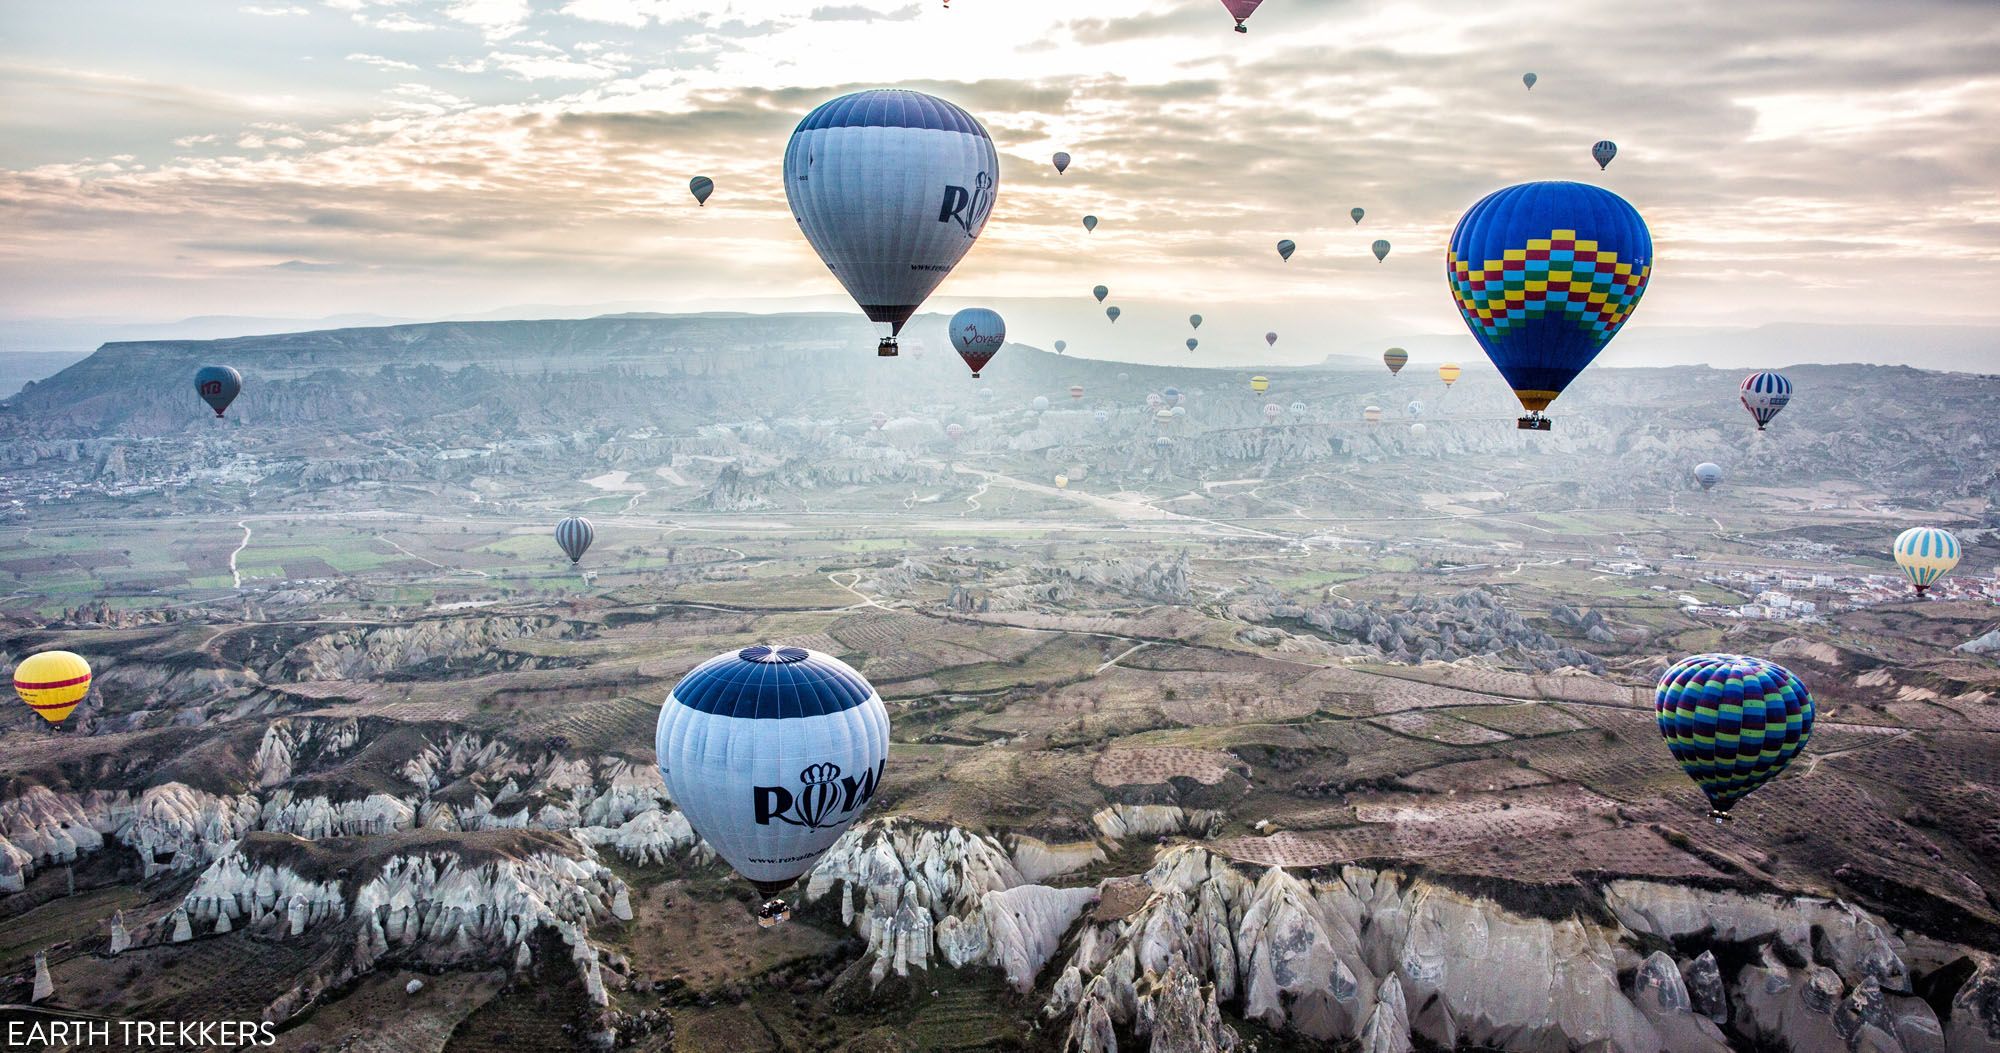 Featured image for “A Hot Air Balloon Flight Over Cappadocia”